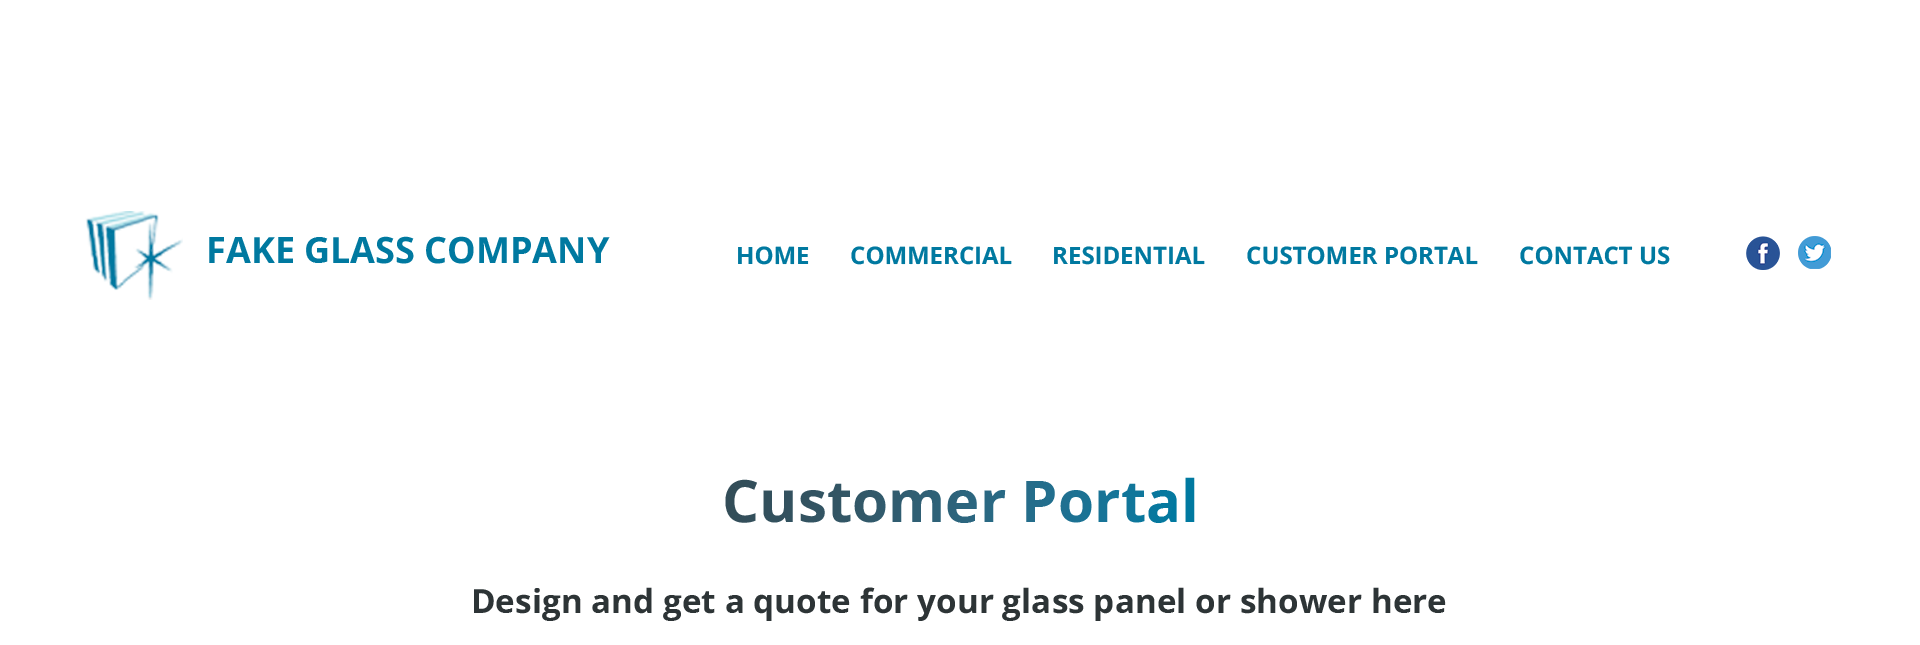 Fake Glass Company Website Header